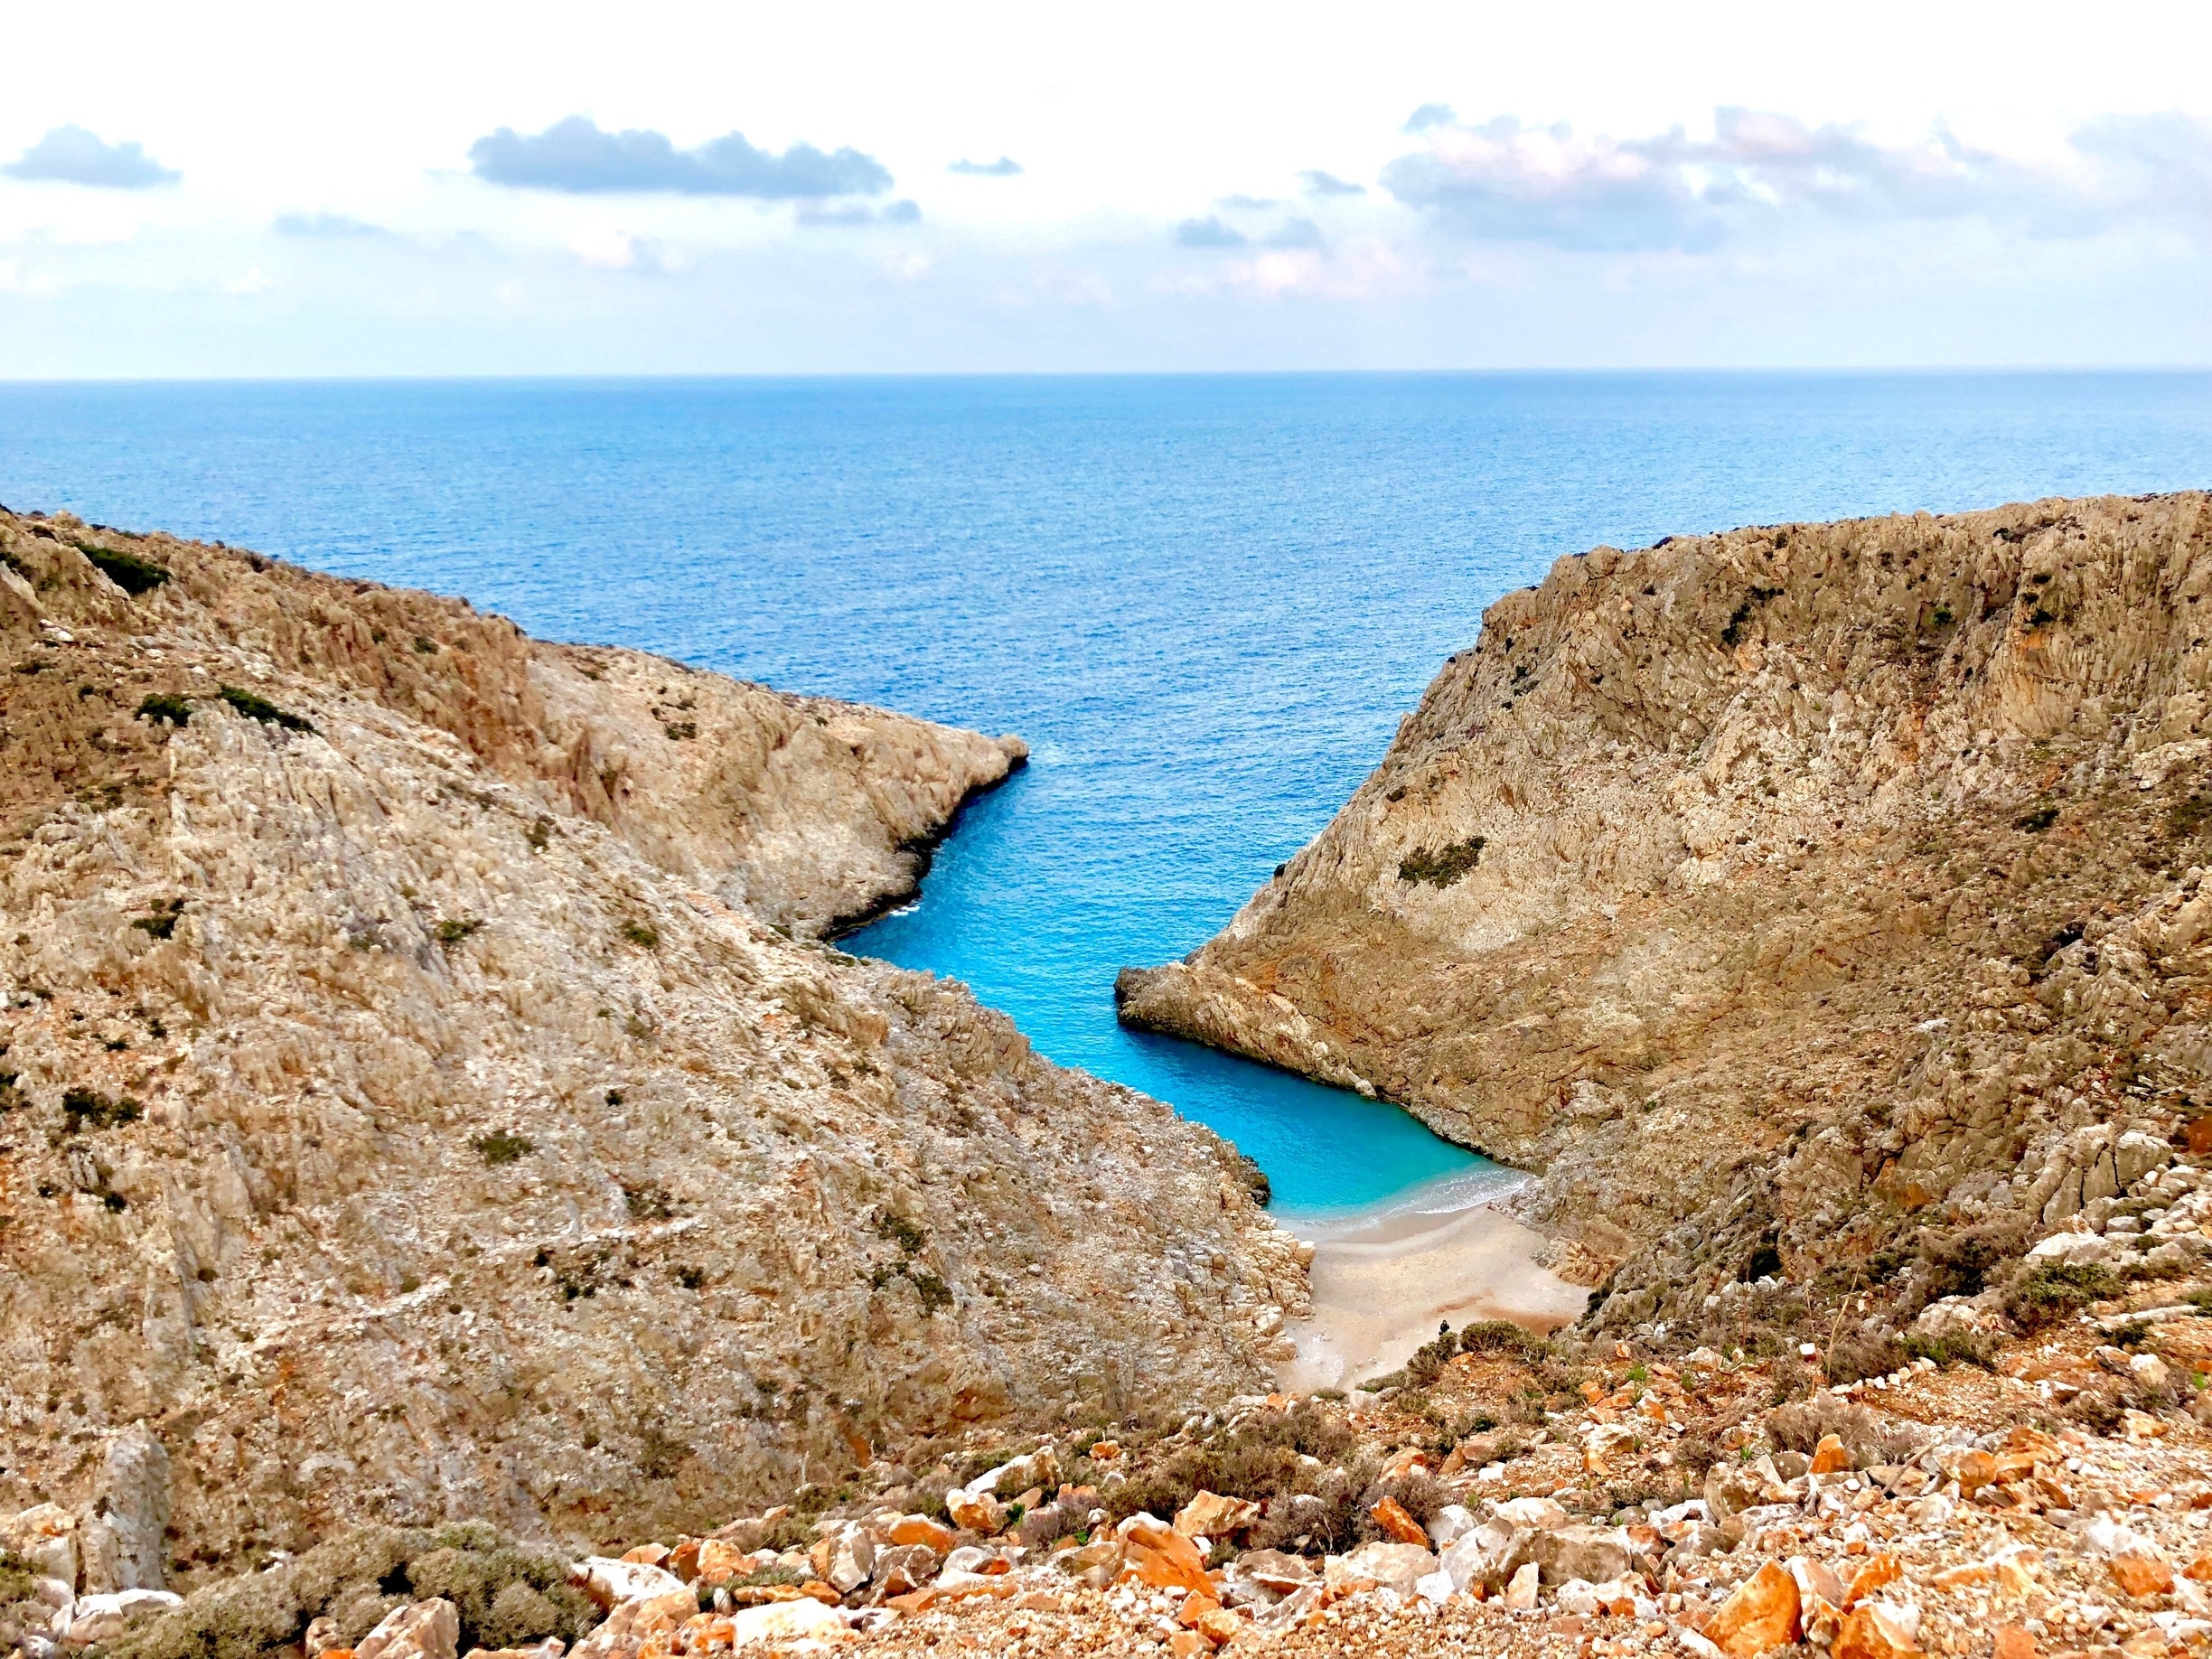 Beautiful and colorful sandy beach near Chania airport on Crete, Greece 
#greece #crete